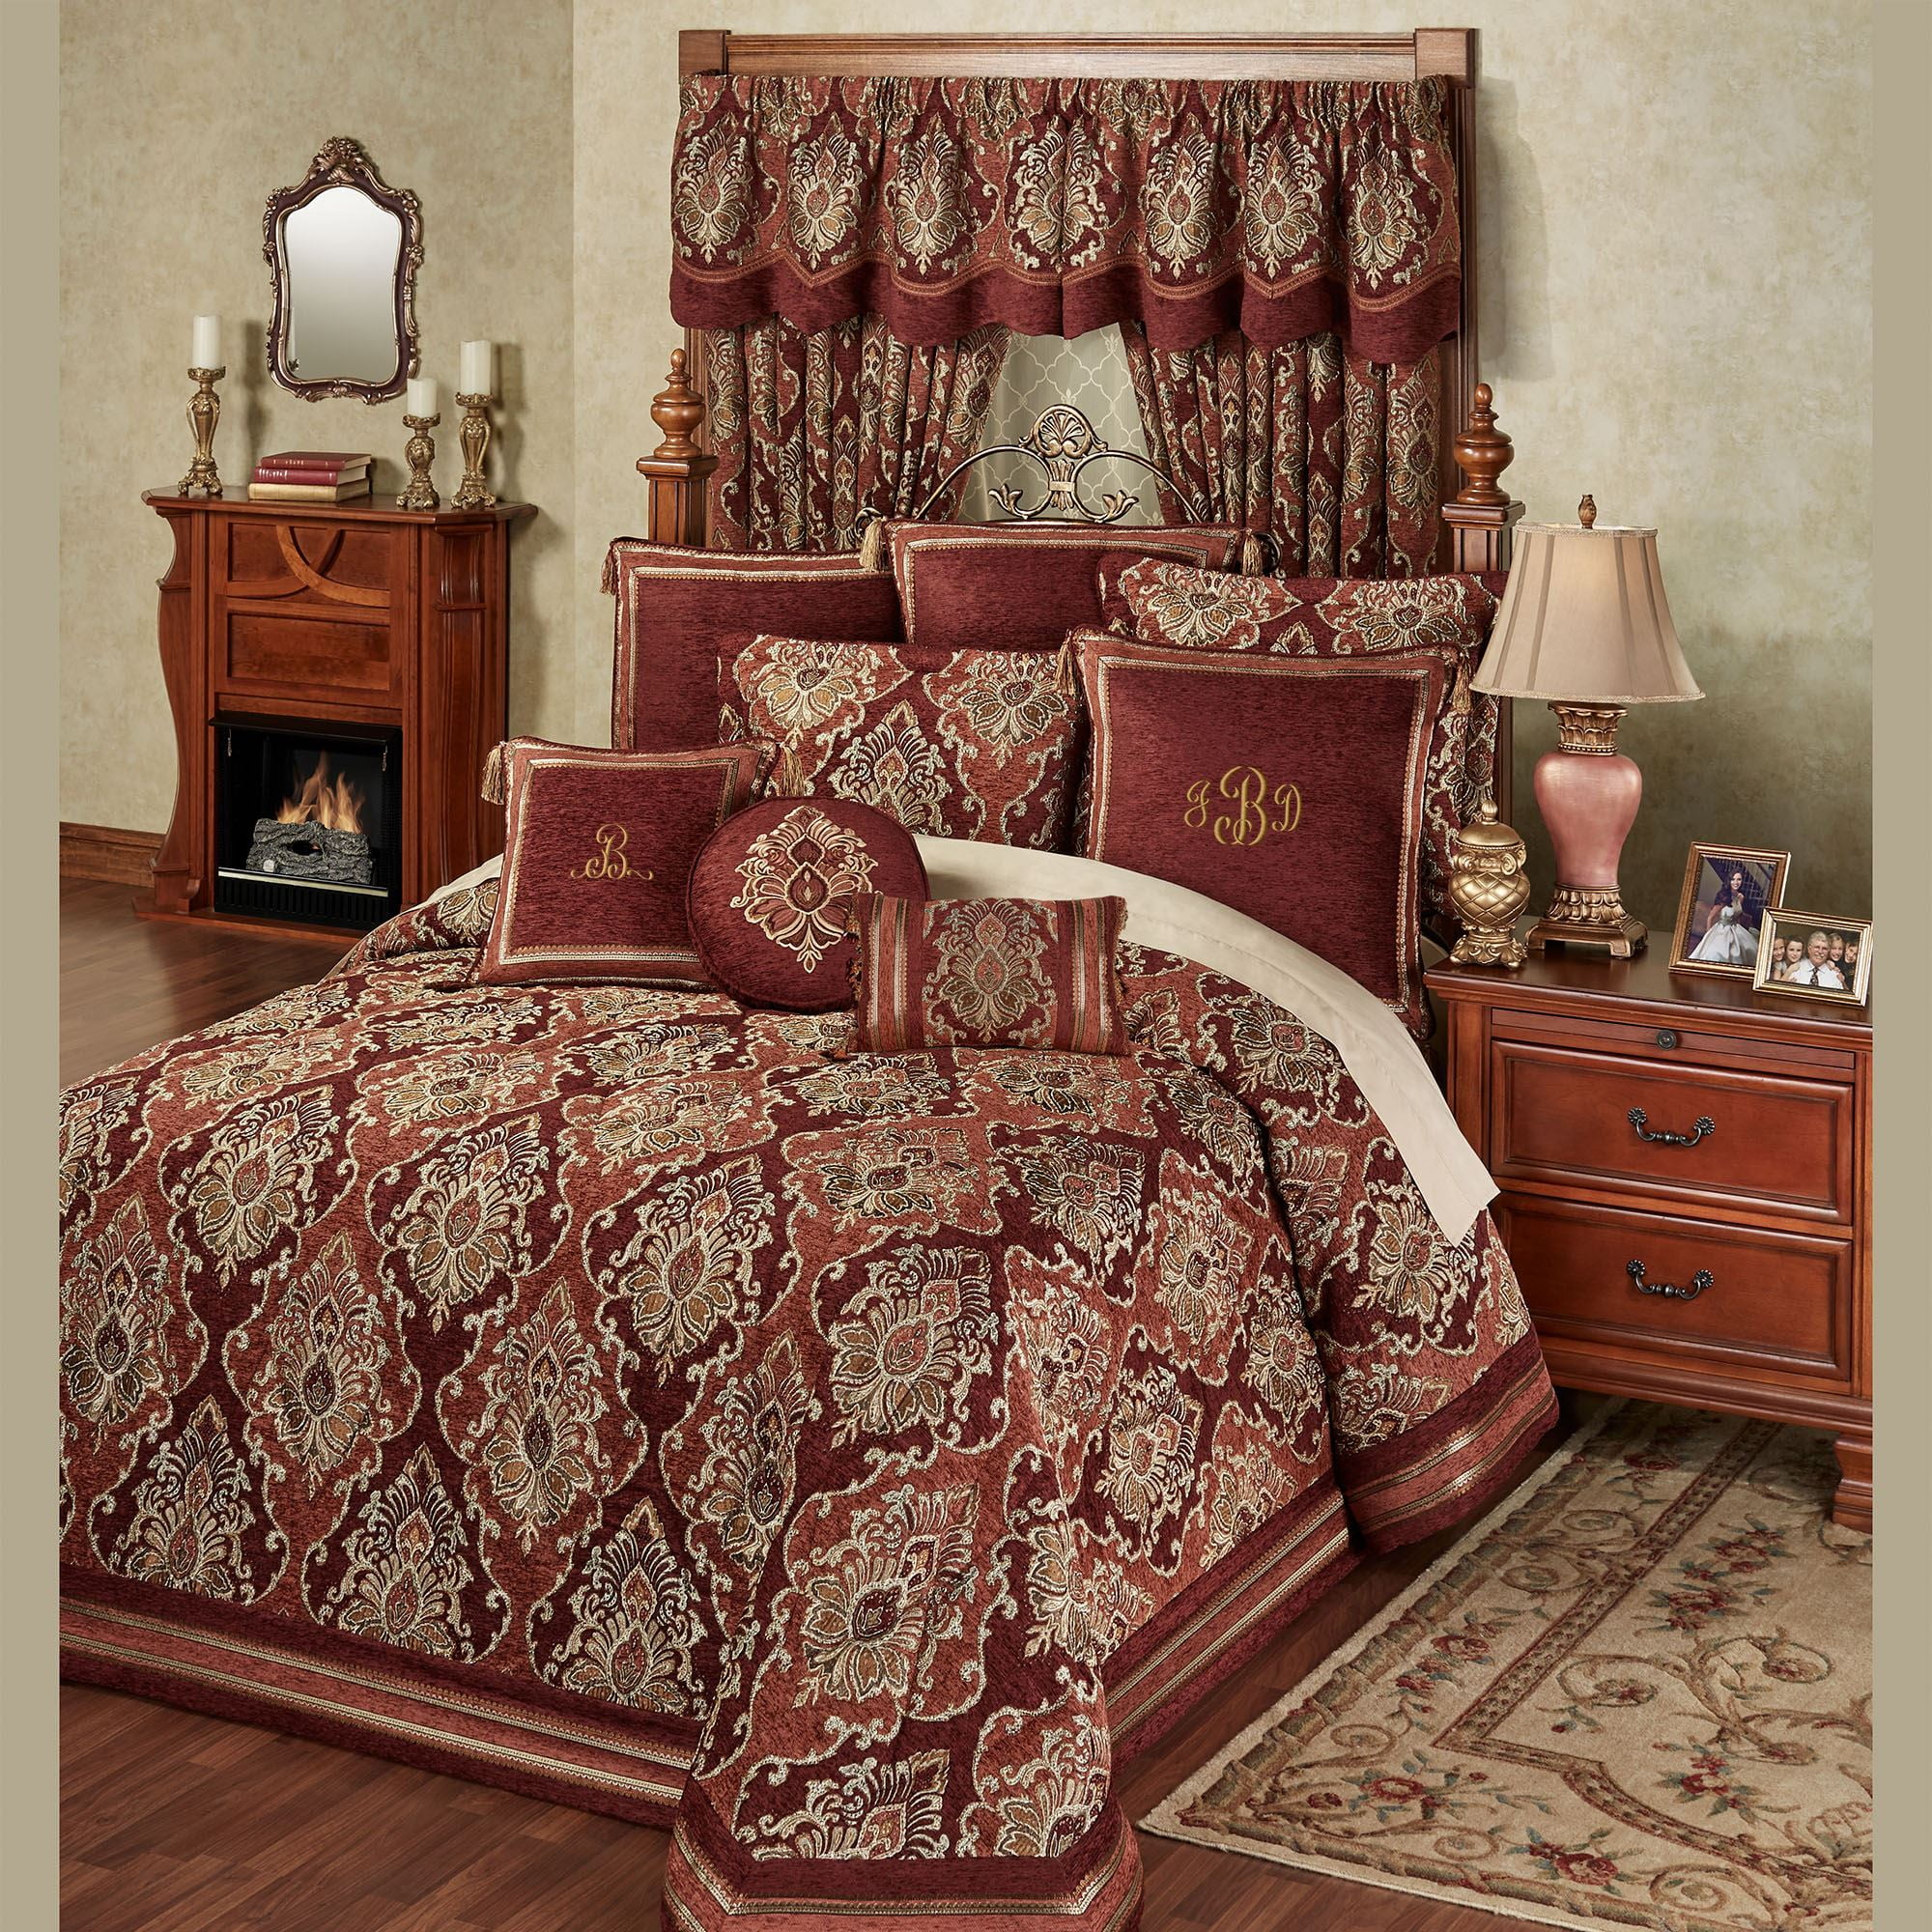 Style for Bedspread Quilted Grande Burgundy Victorian - Chenille Aesthetic - Royal Decor Bedspread Jacquard Ravenna - Elegant Queen - Grande Color Bedding